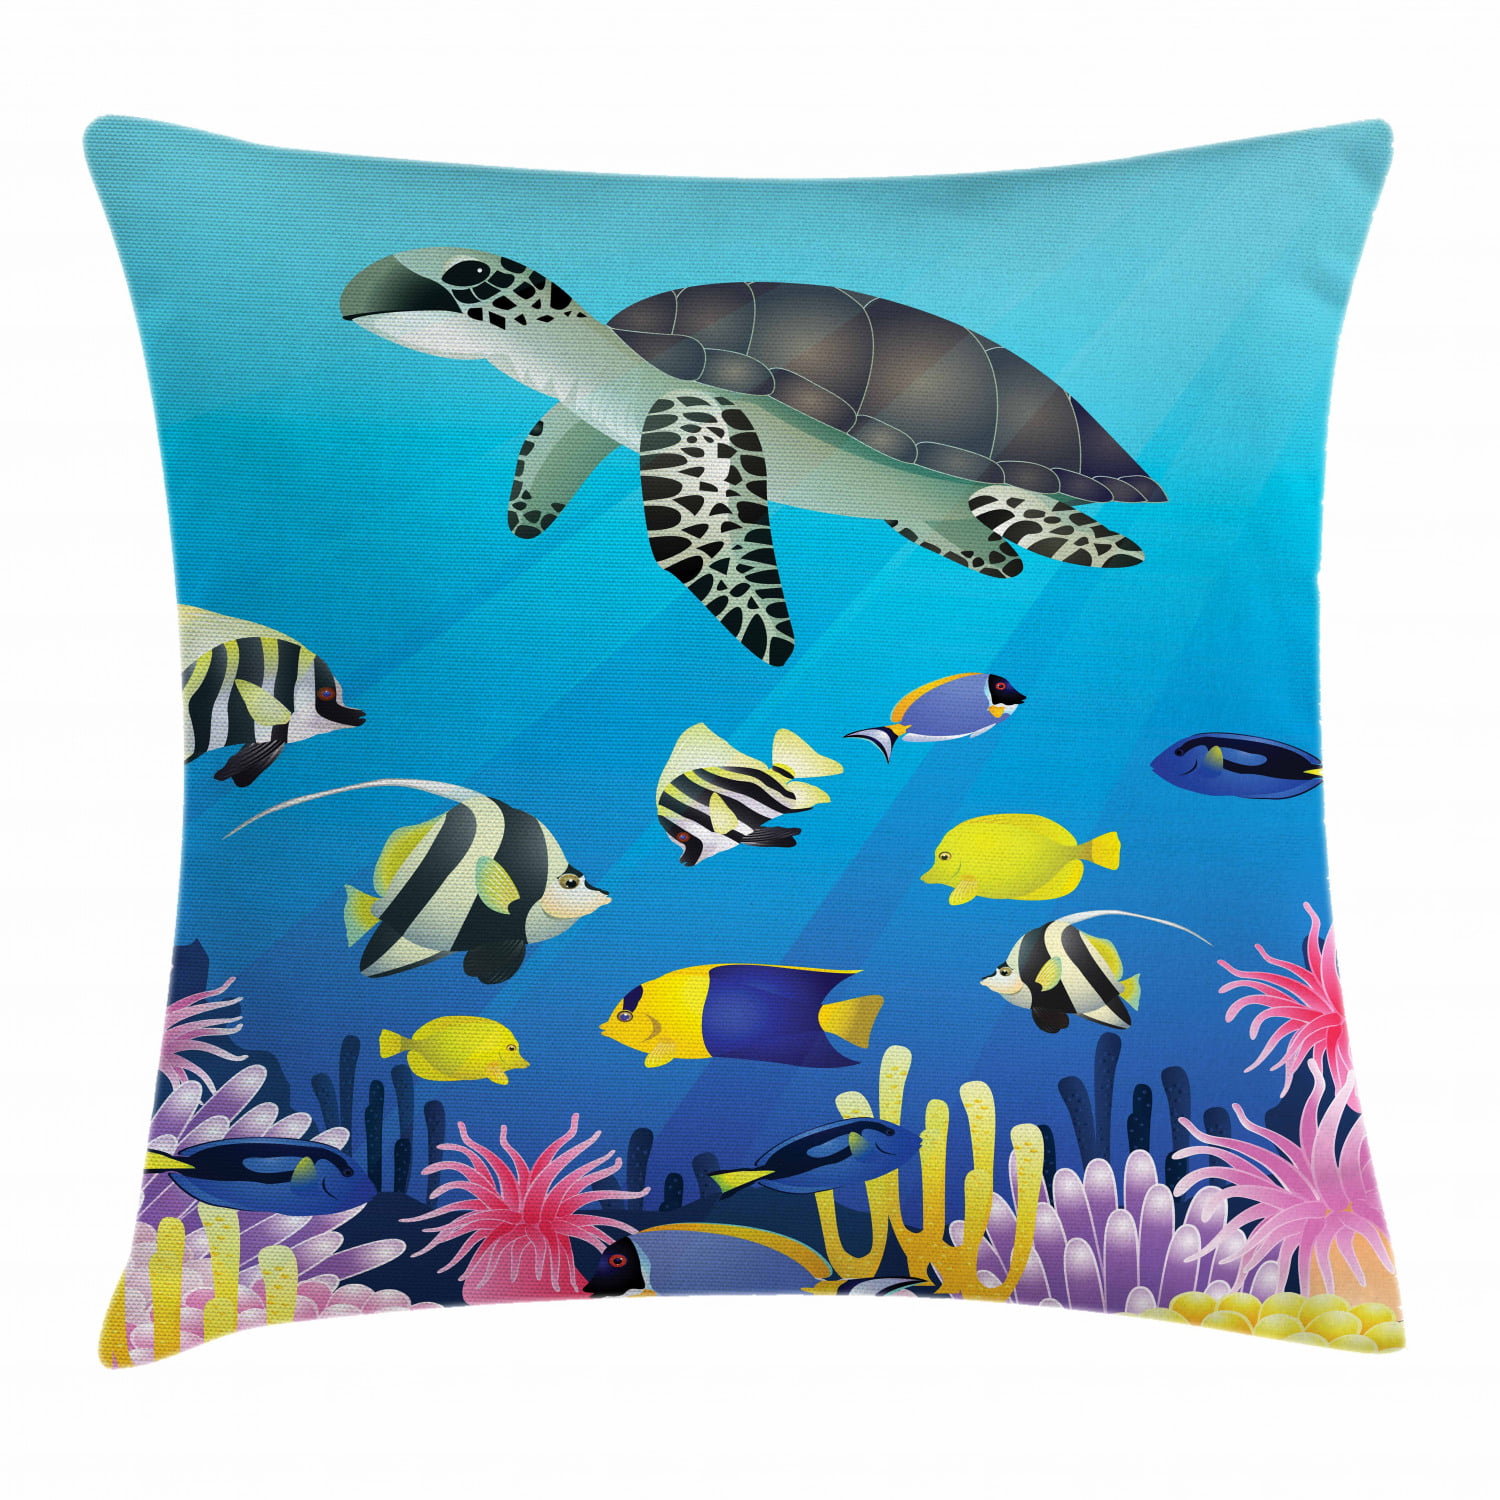 Cute Clownfish Family Apparel Clownfish Sister Throw Pillow 16x16 Multicolor